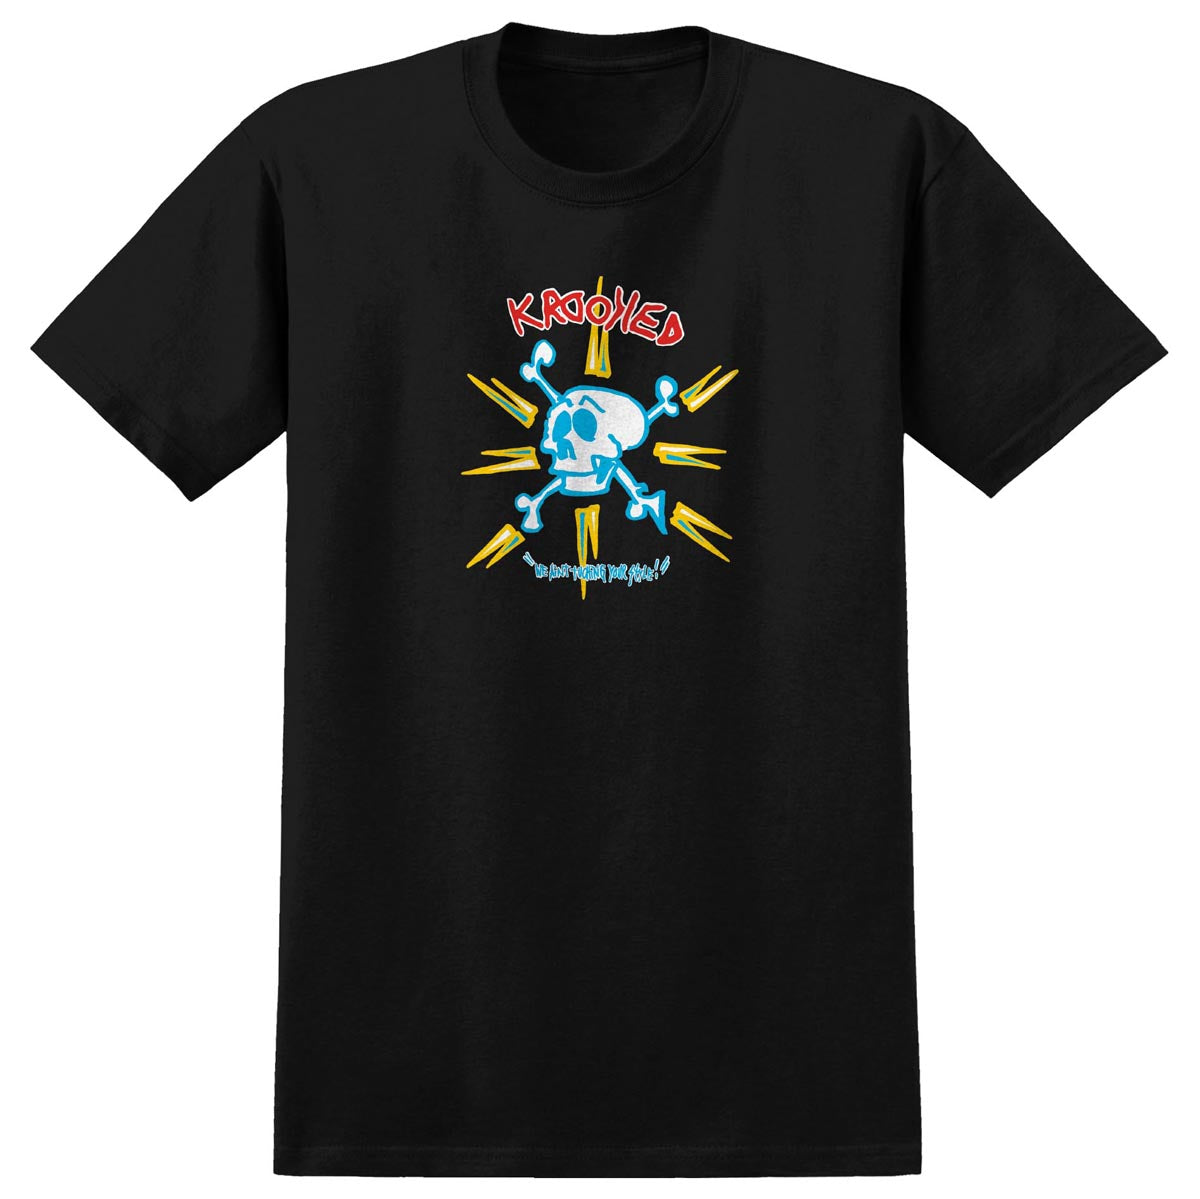 Krooked Style T-Shirt - Black/Multi Color image 1